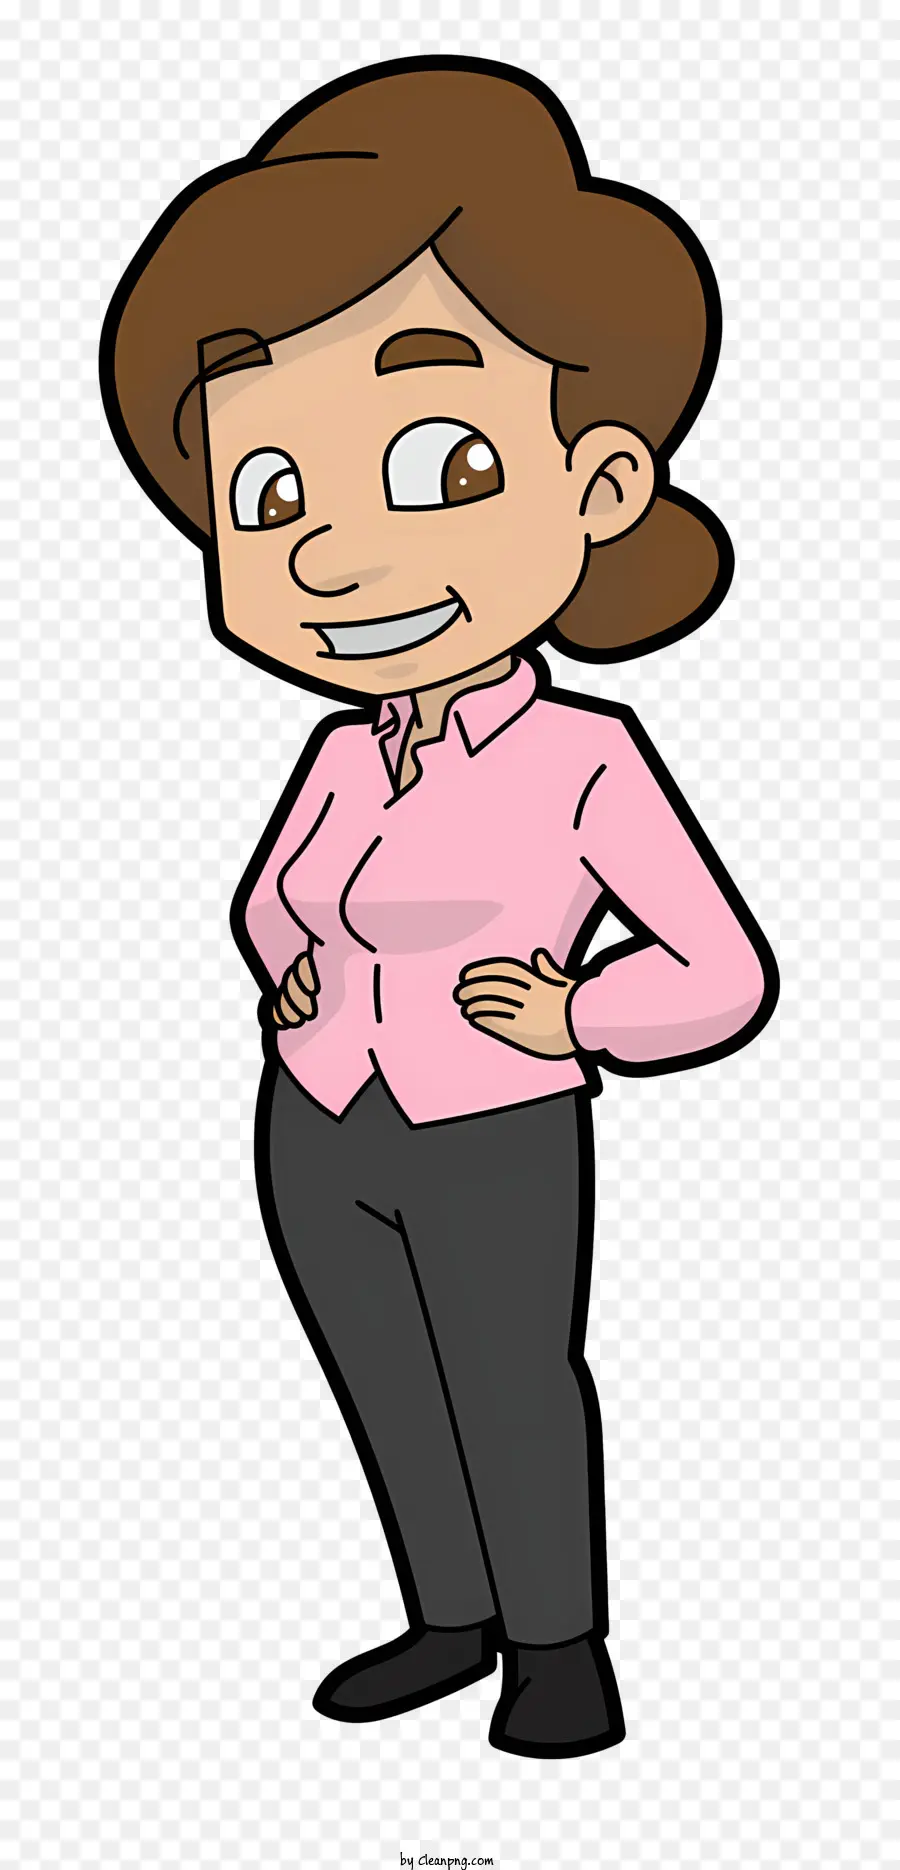 People Cartoon Charakter weibliche Charakter Mitte 20s rosa Bluse - Cartooncharakter in rosa Bluse, schwarze Hose